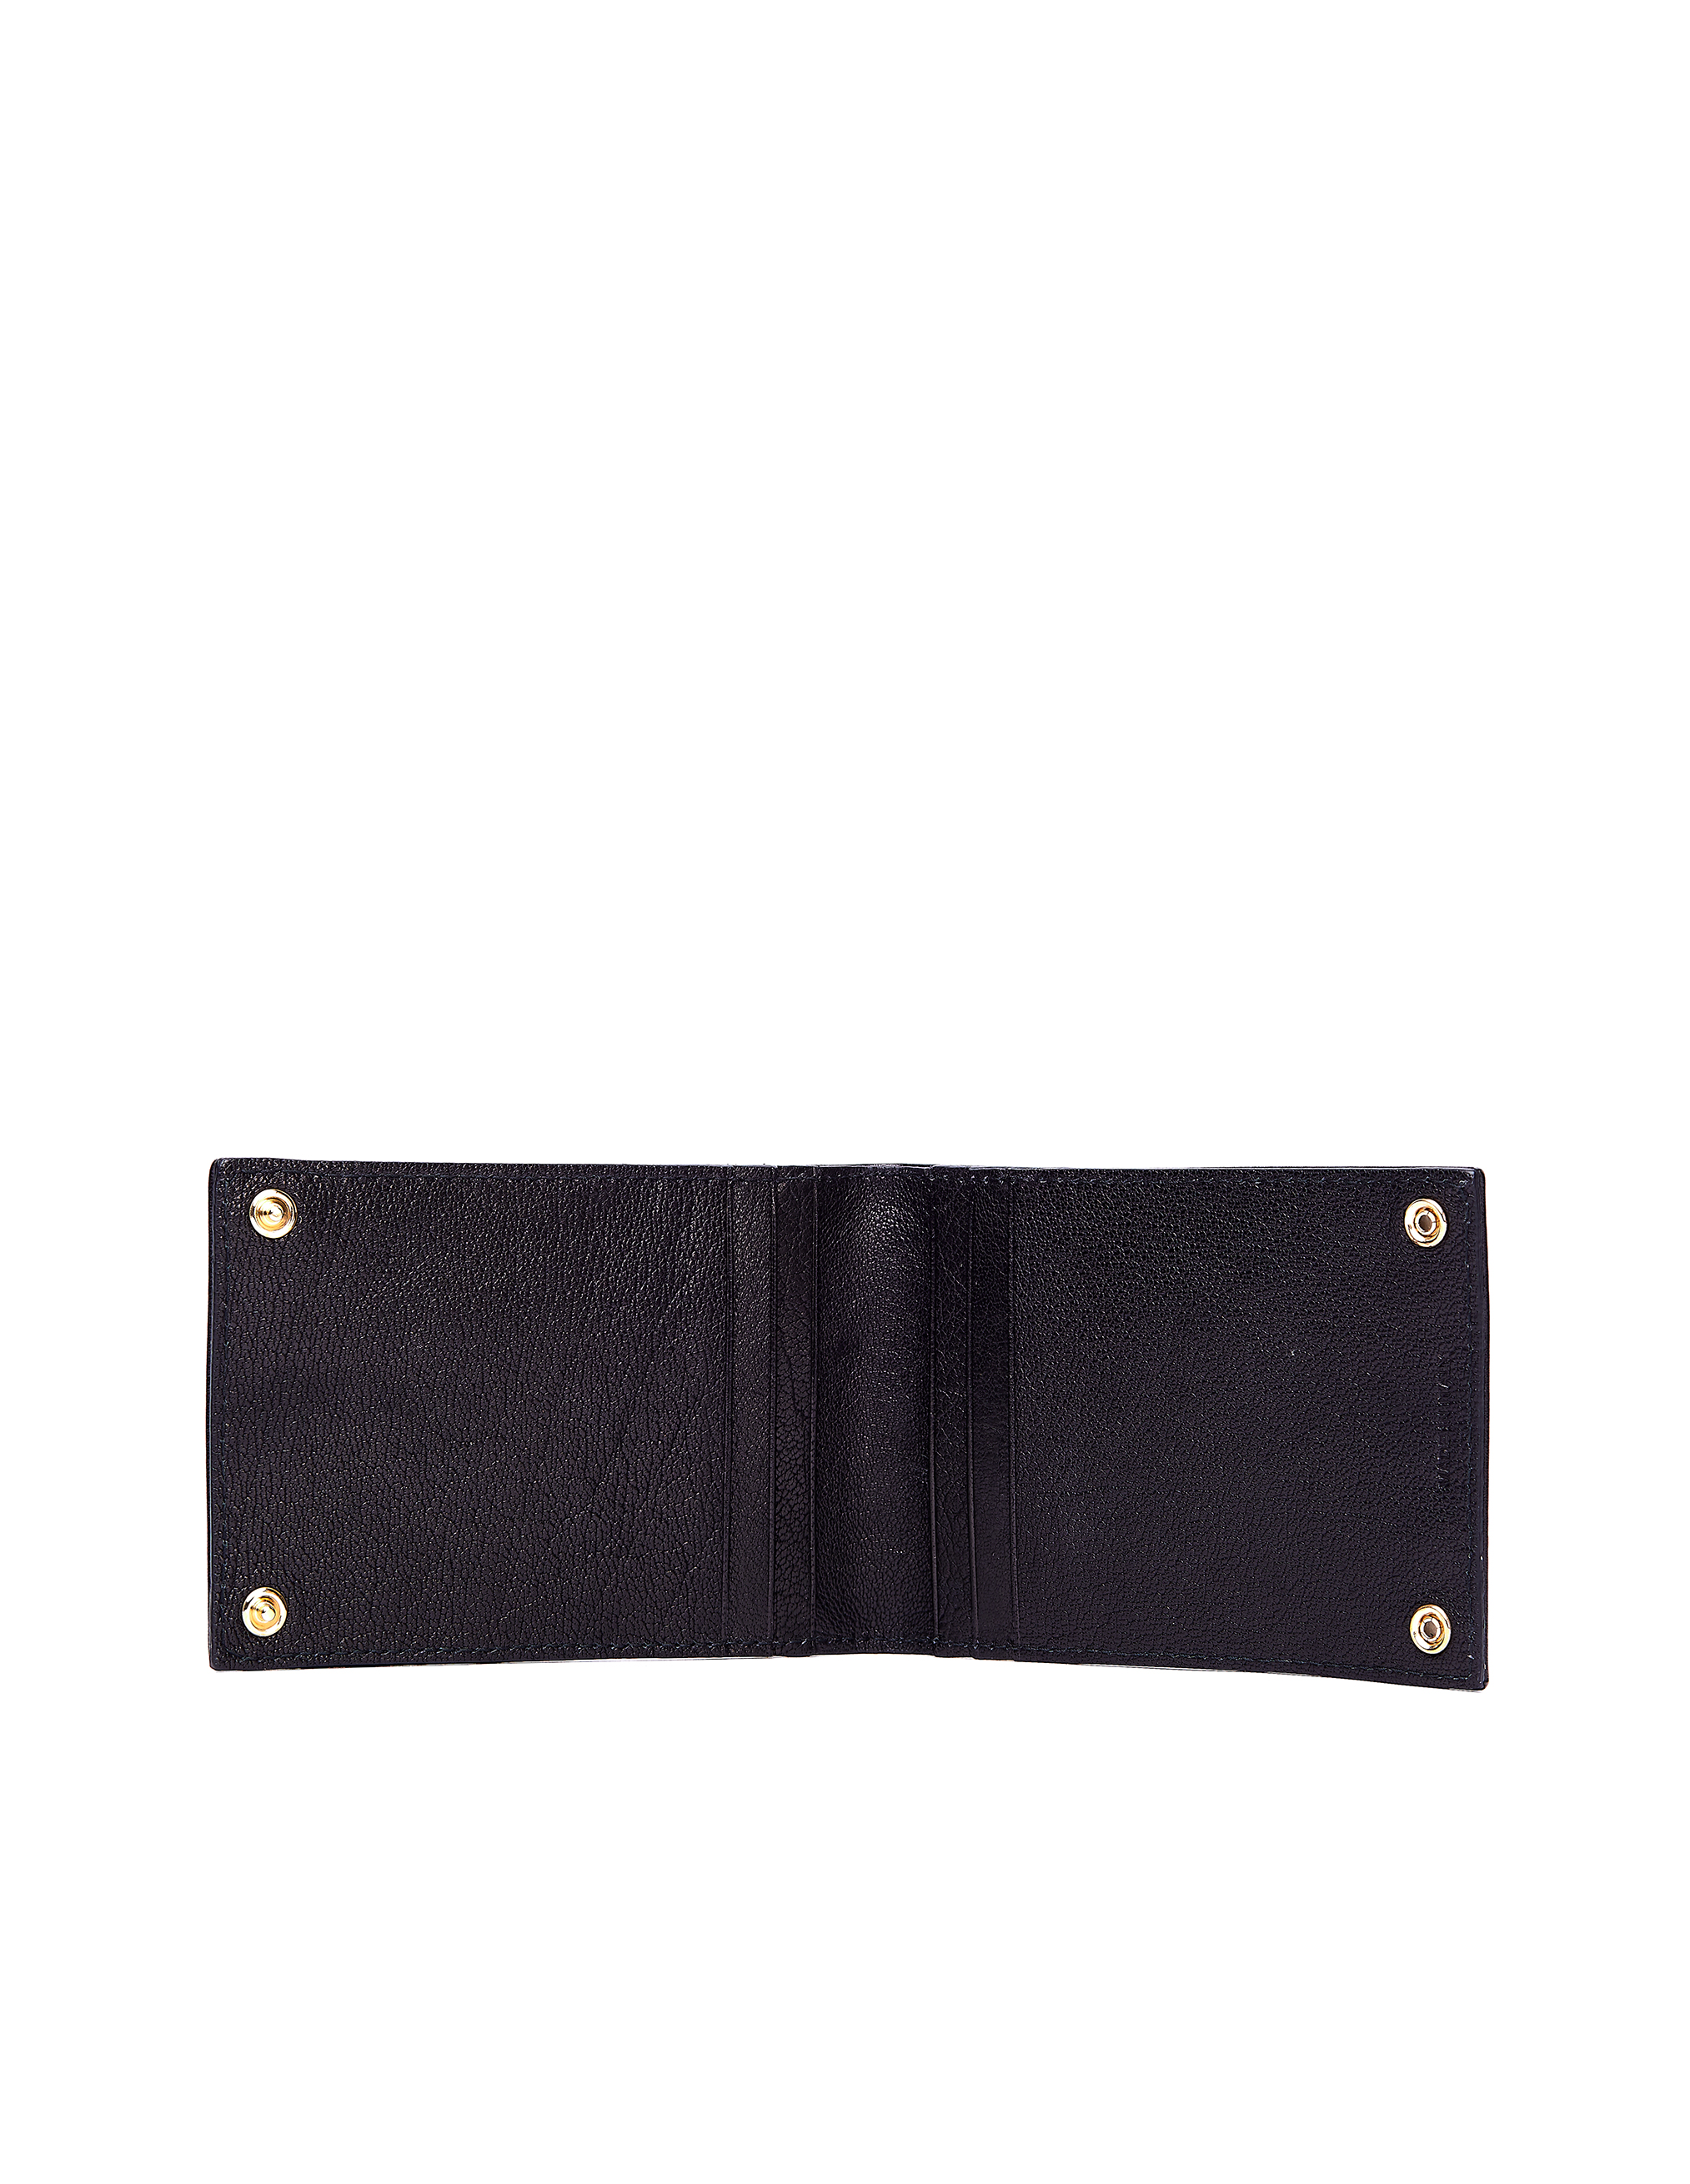 Черный кожаный кардхолдер на кнопках Ugo Cacciatori WL119/VGN, размер One Size WL119/VGN - фото 2